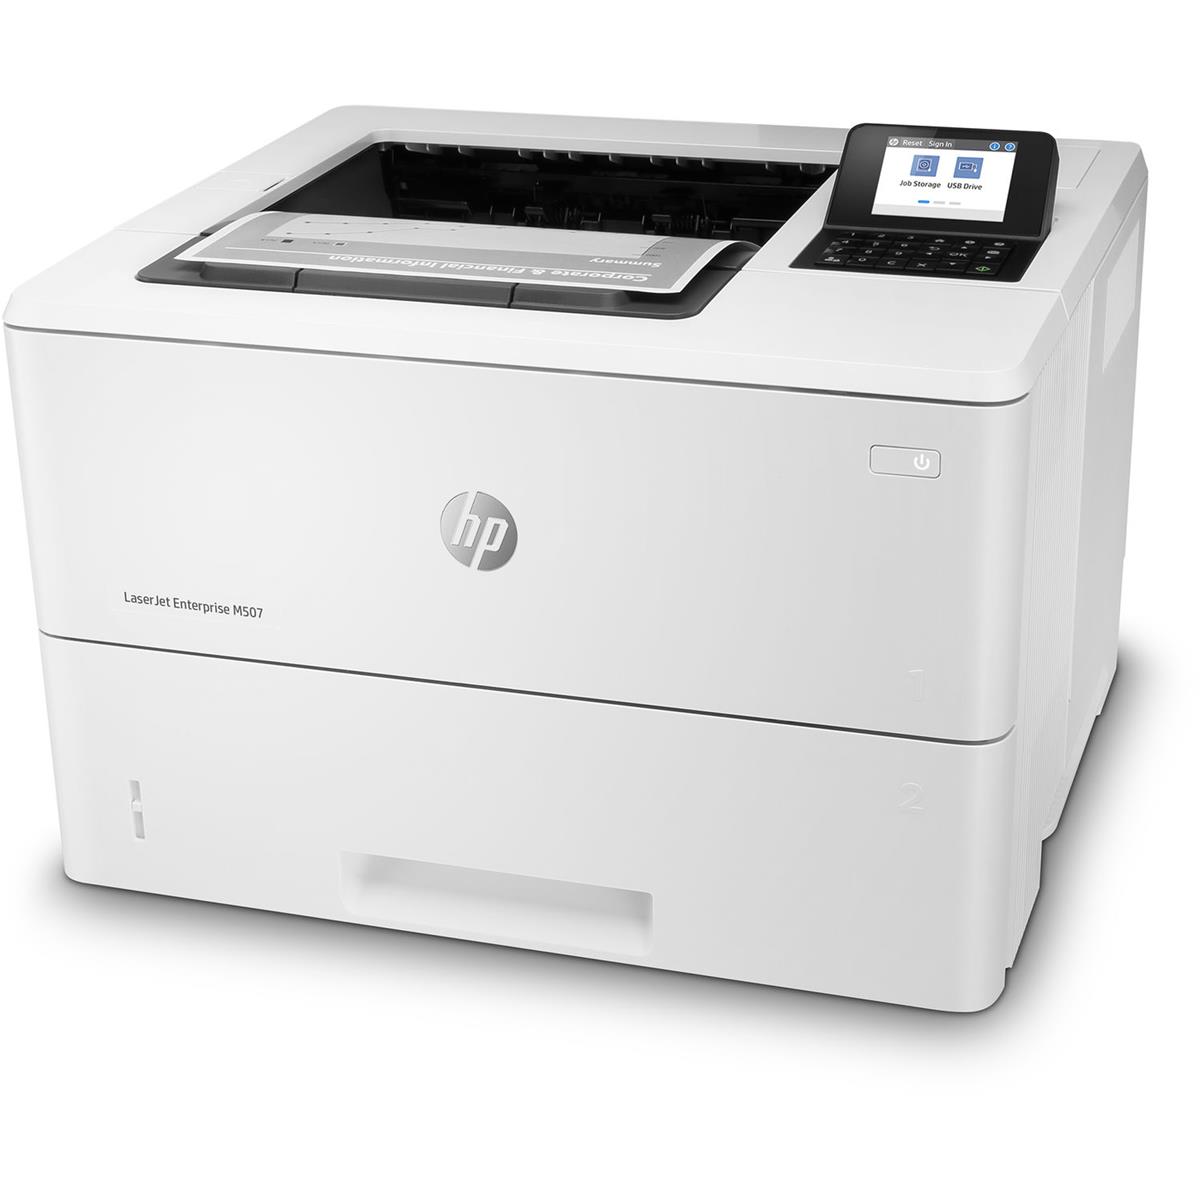 Image of HP LaserJet Enterprise M507n Monochrome Laser Printer